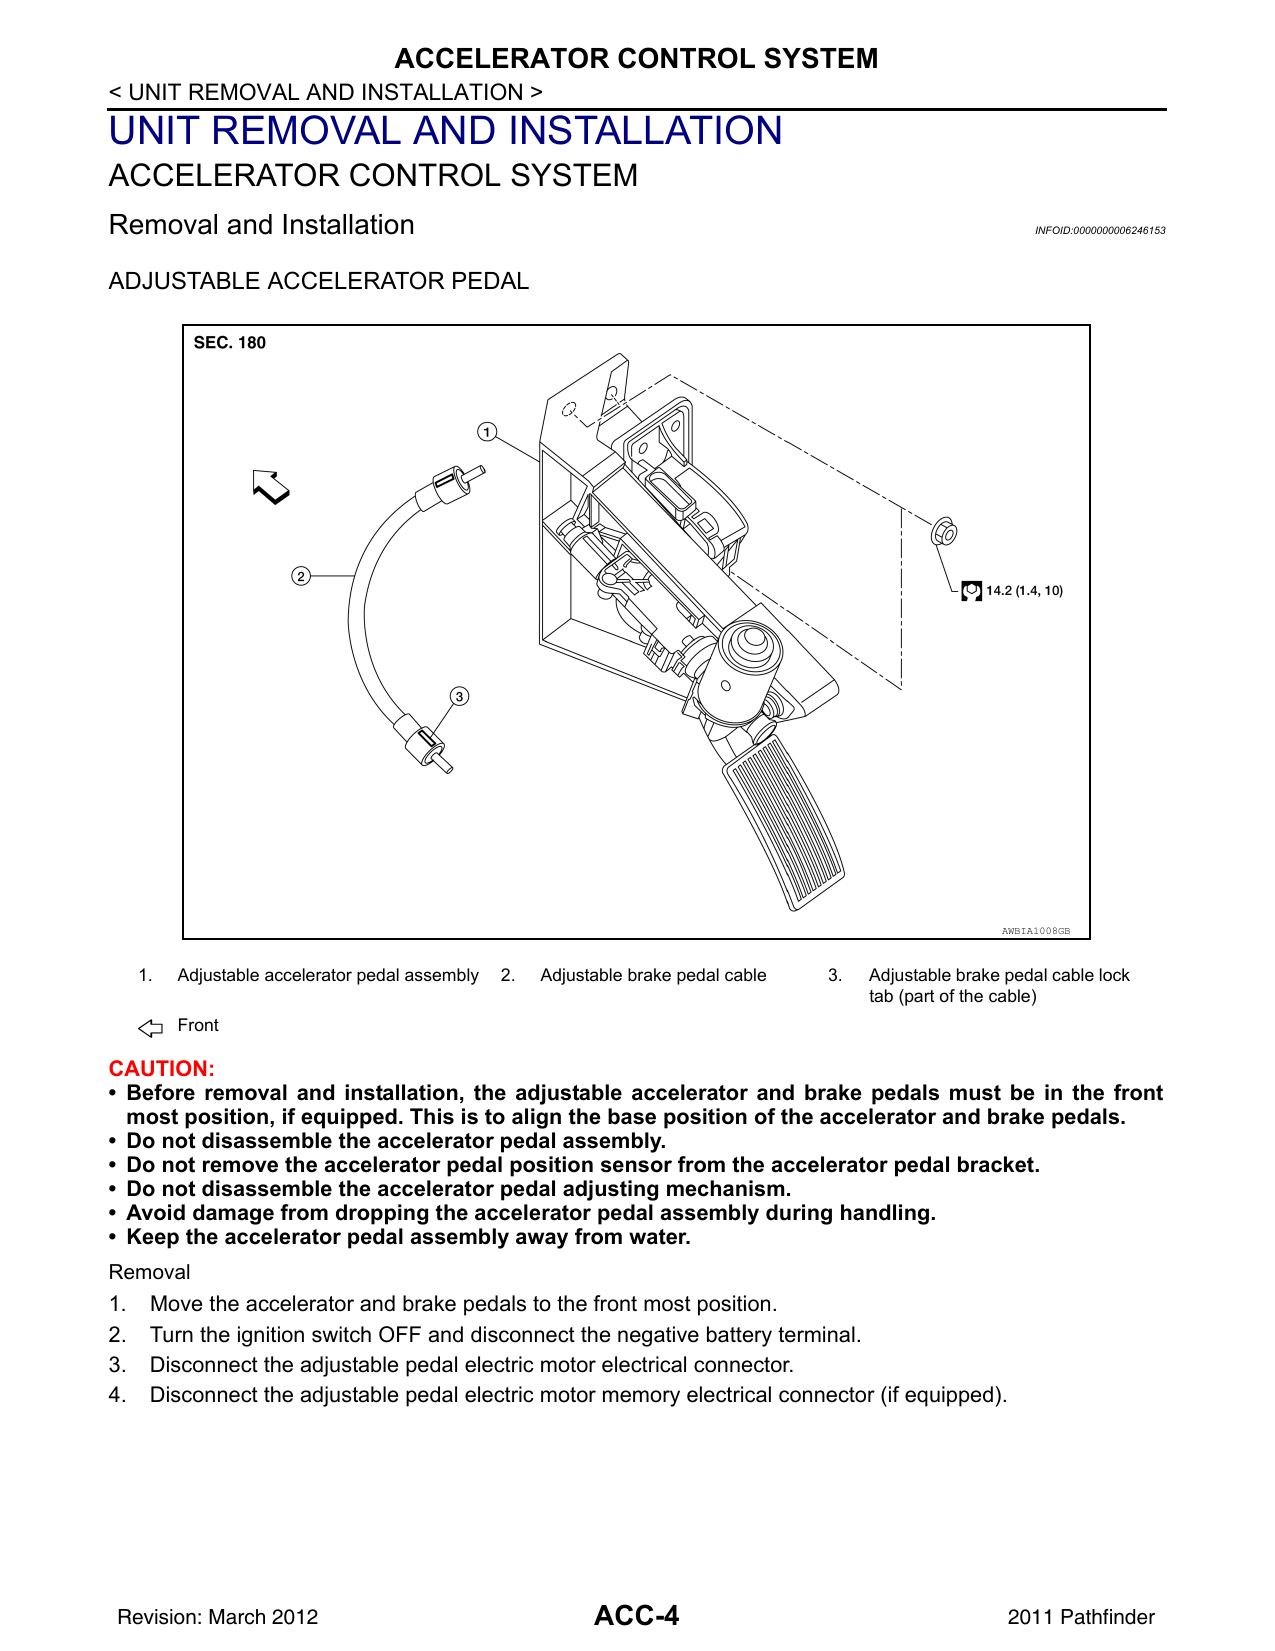 2011-2013 Nissan Pathfinder shop manual Preview image 4